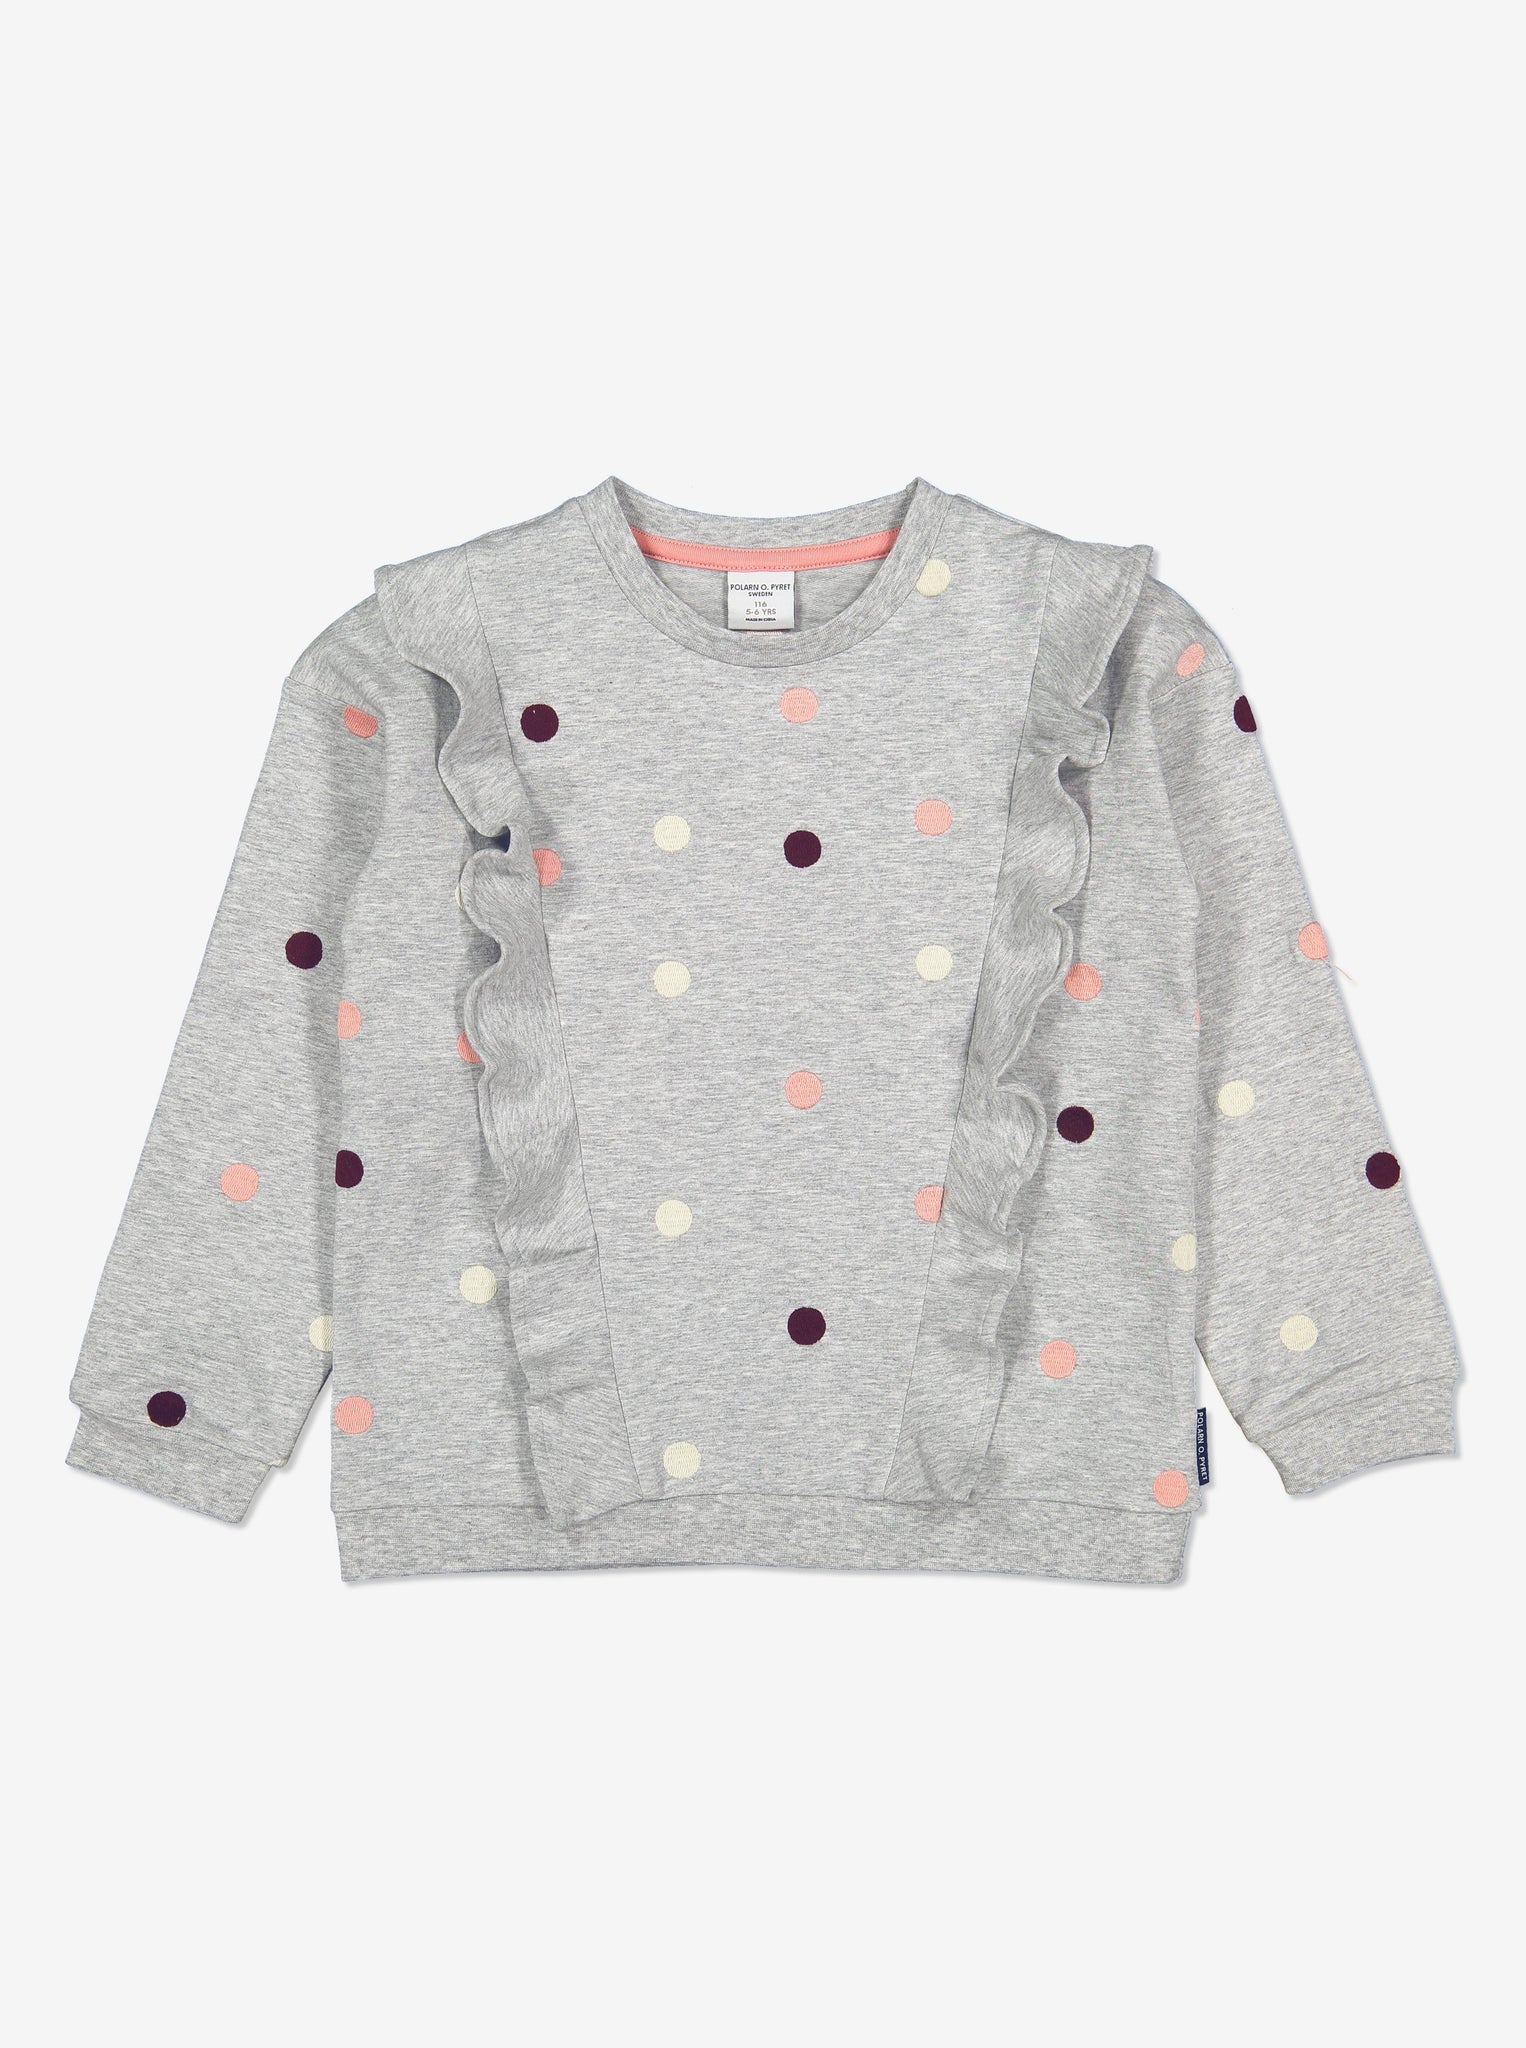 Polka Dot Kids Sweatshirt-Unisex-1-6y-Grey